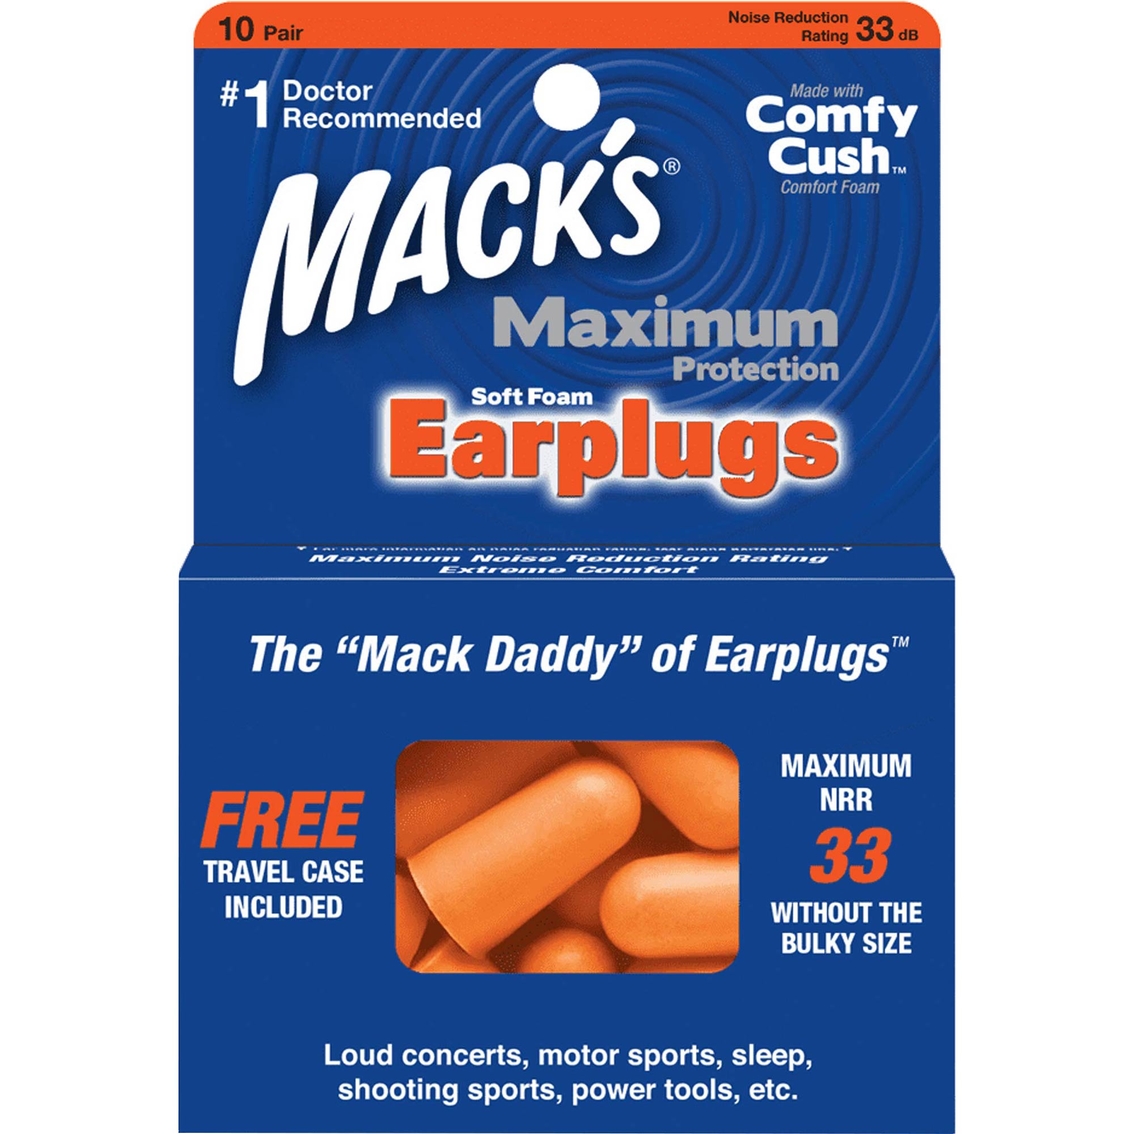 Macks Maximum Protection Ear Plugs 10-pair Box with Free Travel Case